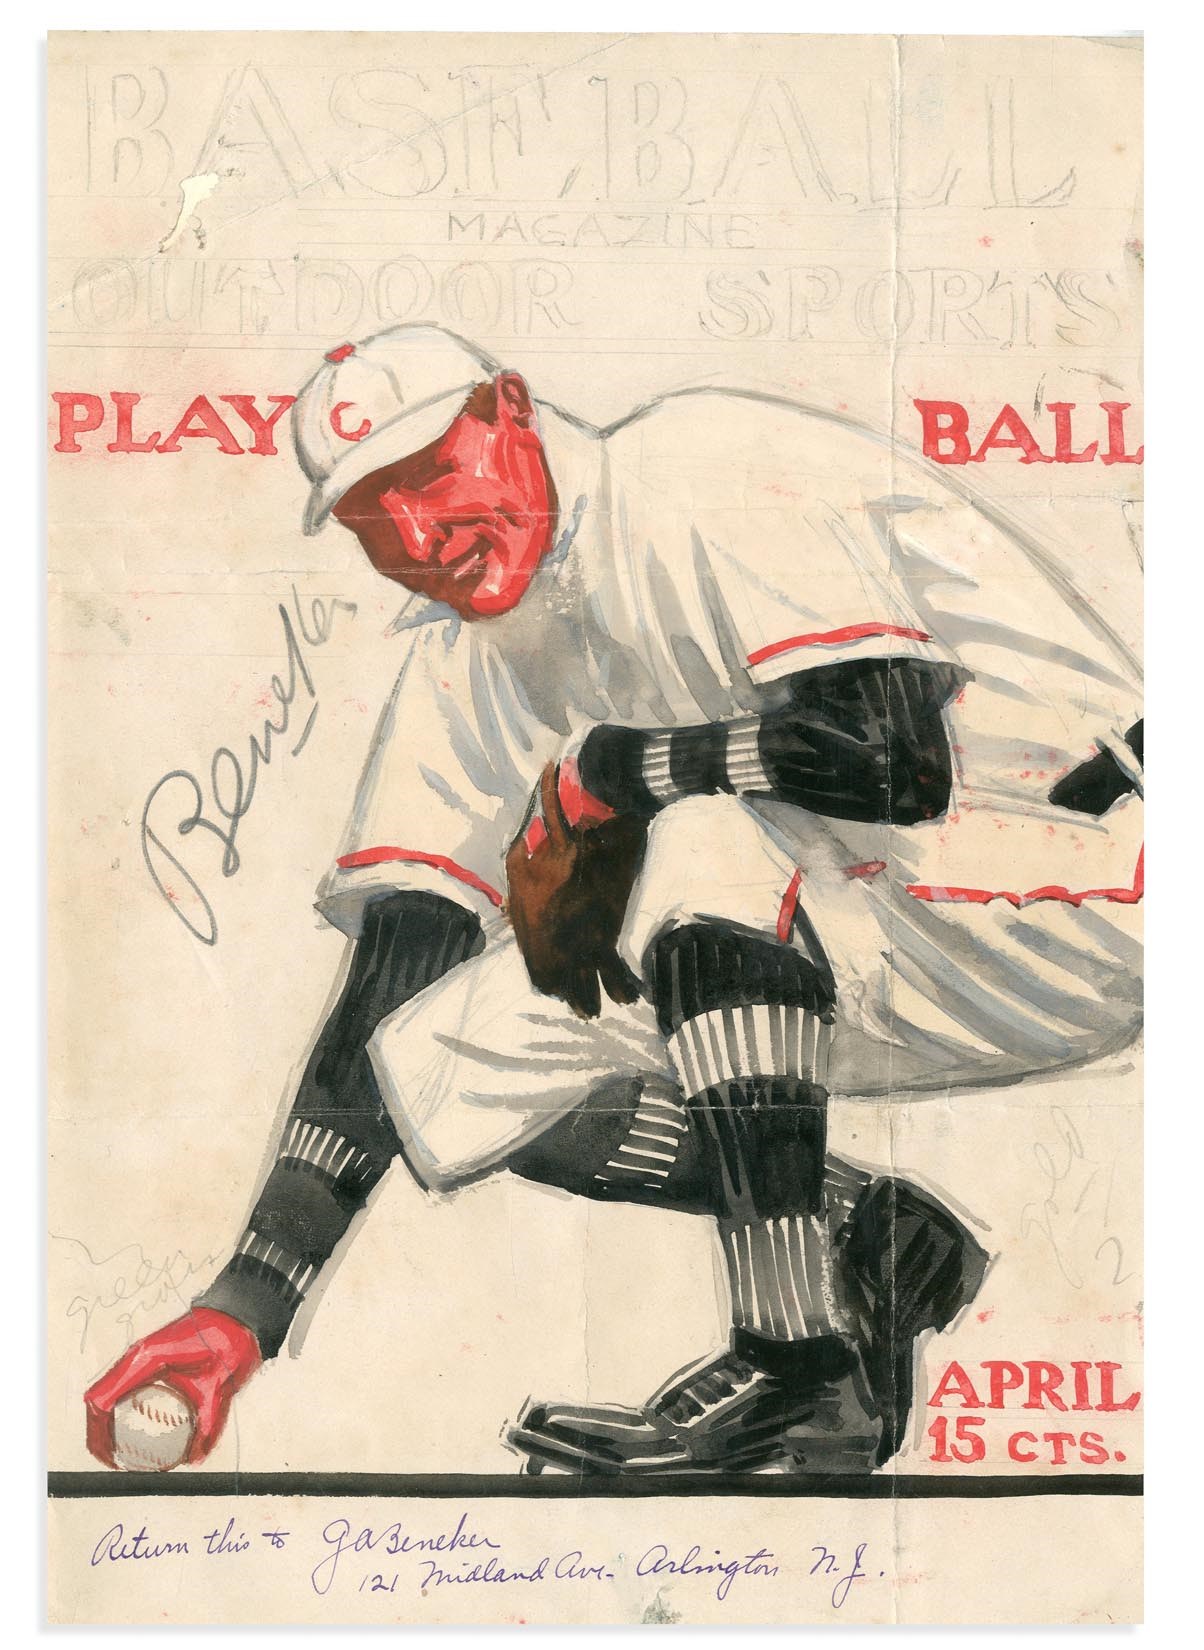 - April 1912 "Baseball Magazine" Cover Art Study by Gerrit Beneker (1882-1934)